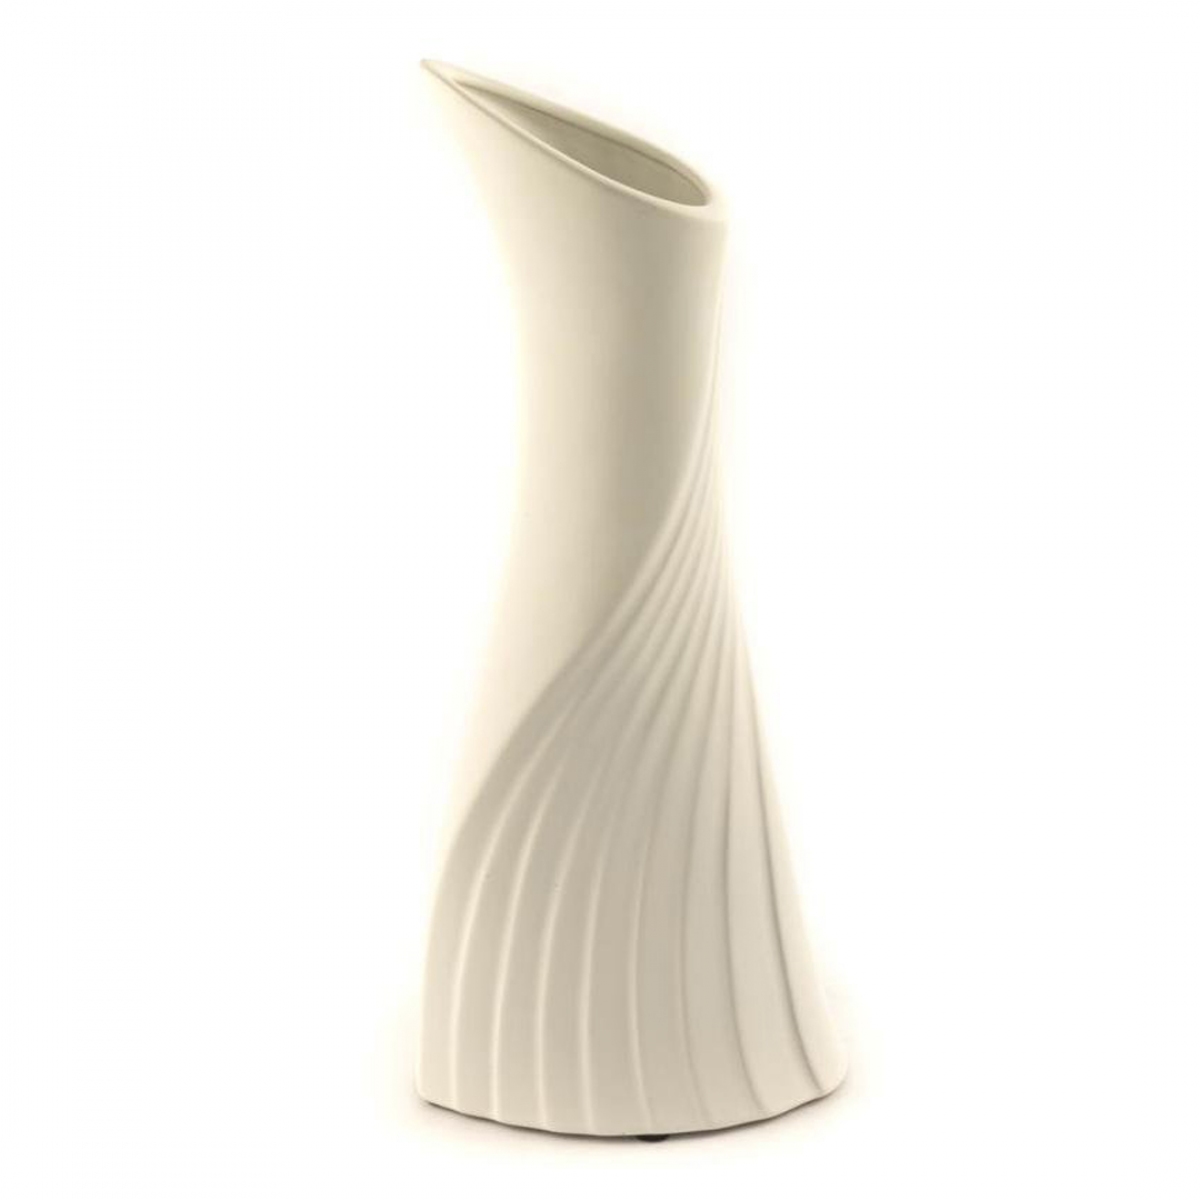 Beyaz Porselen Vazo 10x37 cm